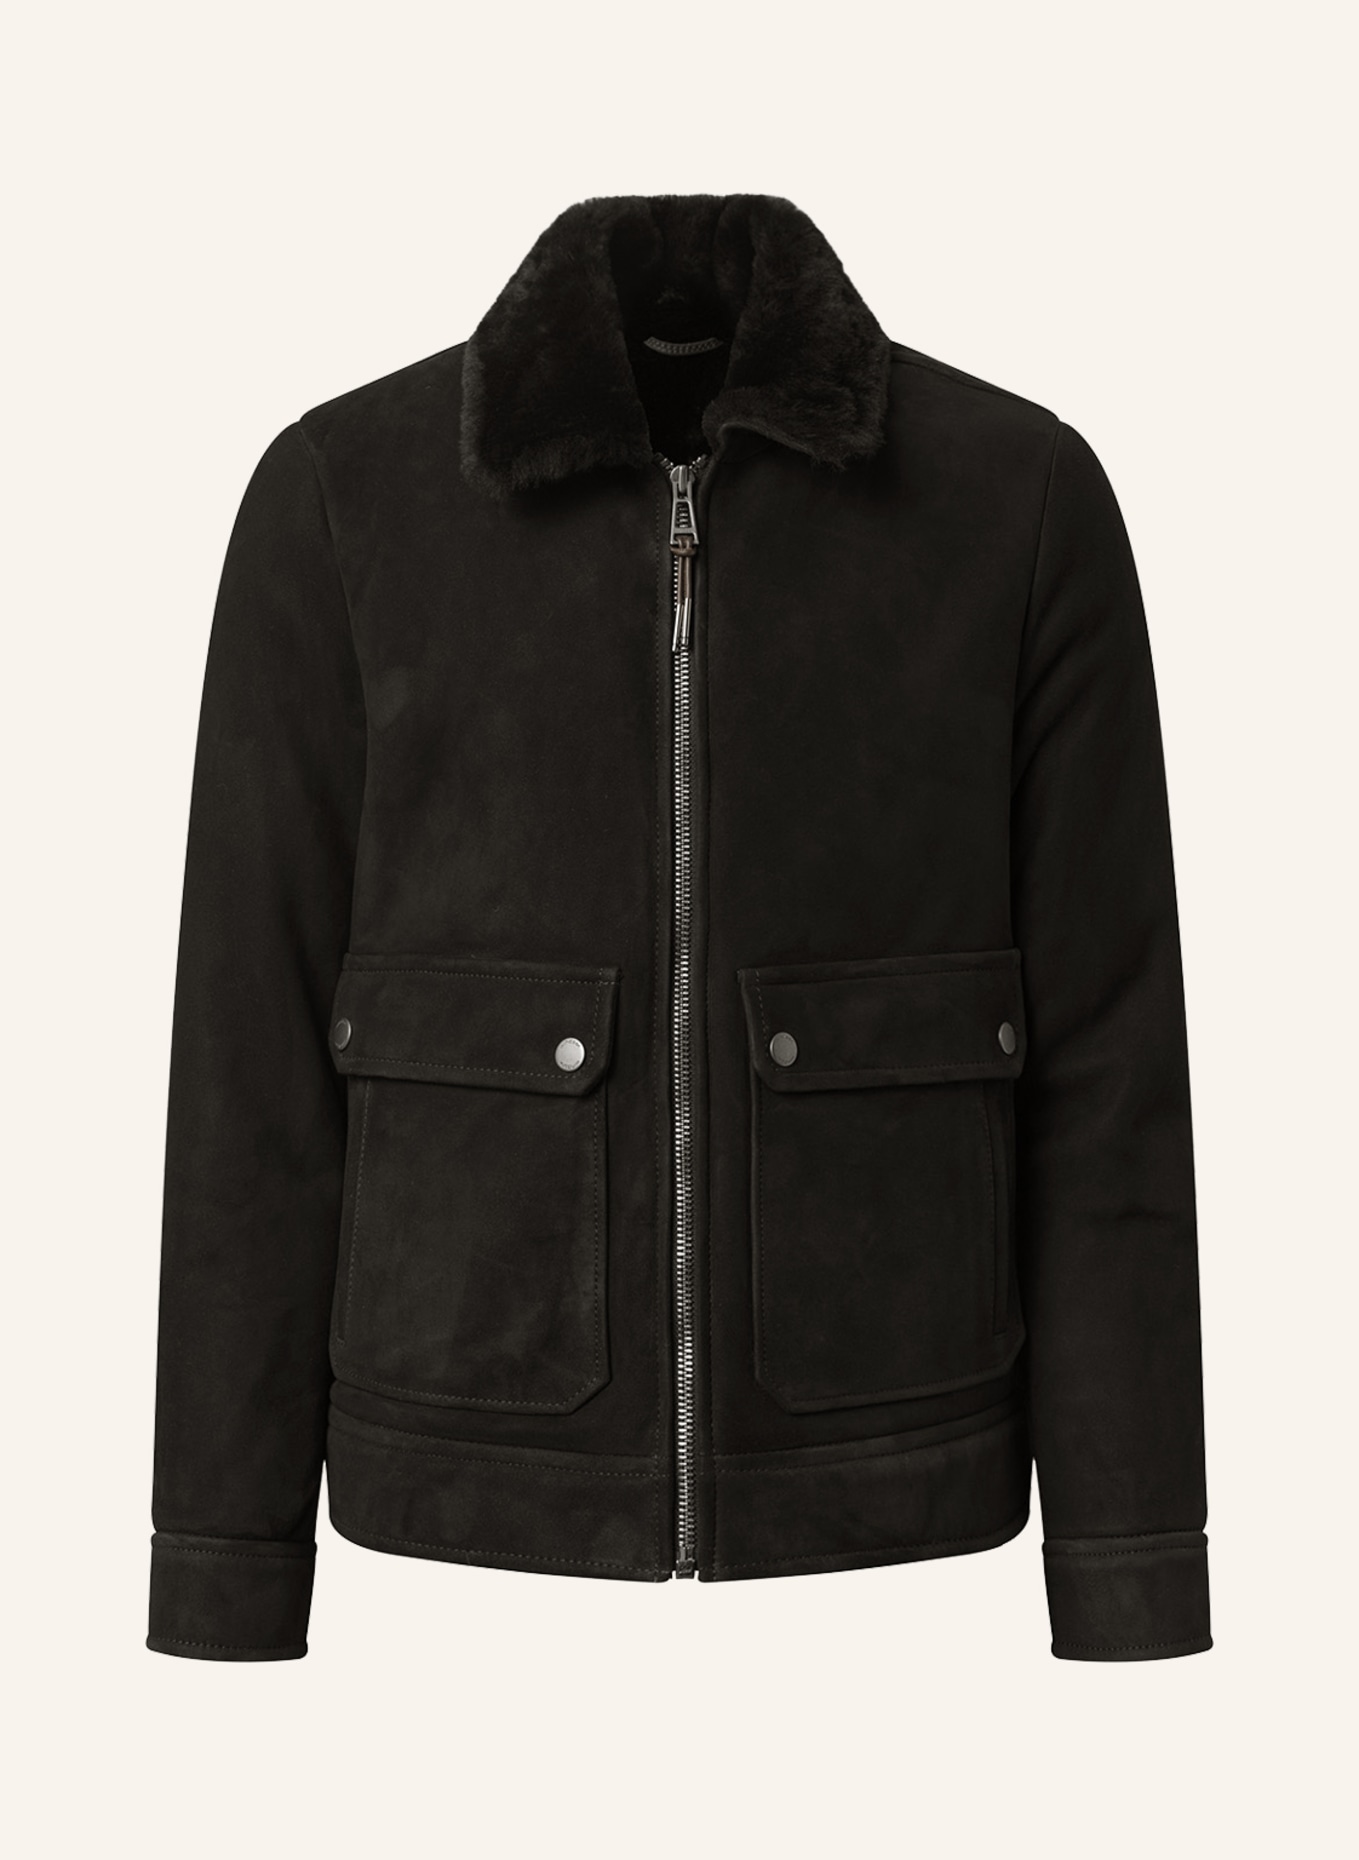 BELSTAFF Leather bomber jacket ALSTONE with lambskin in black/ brown